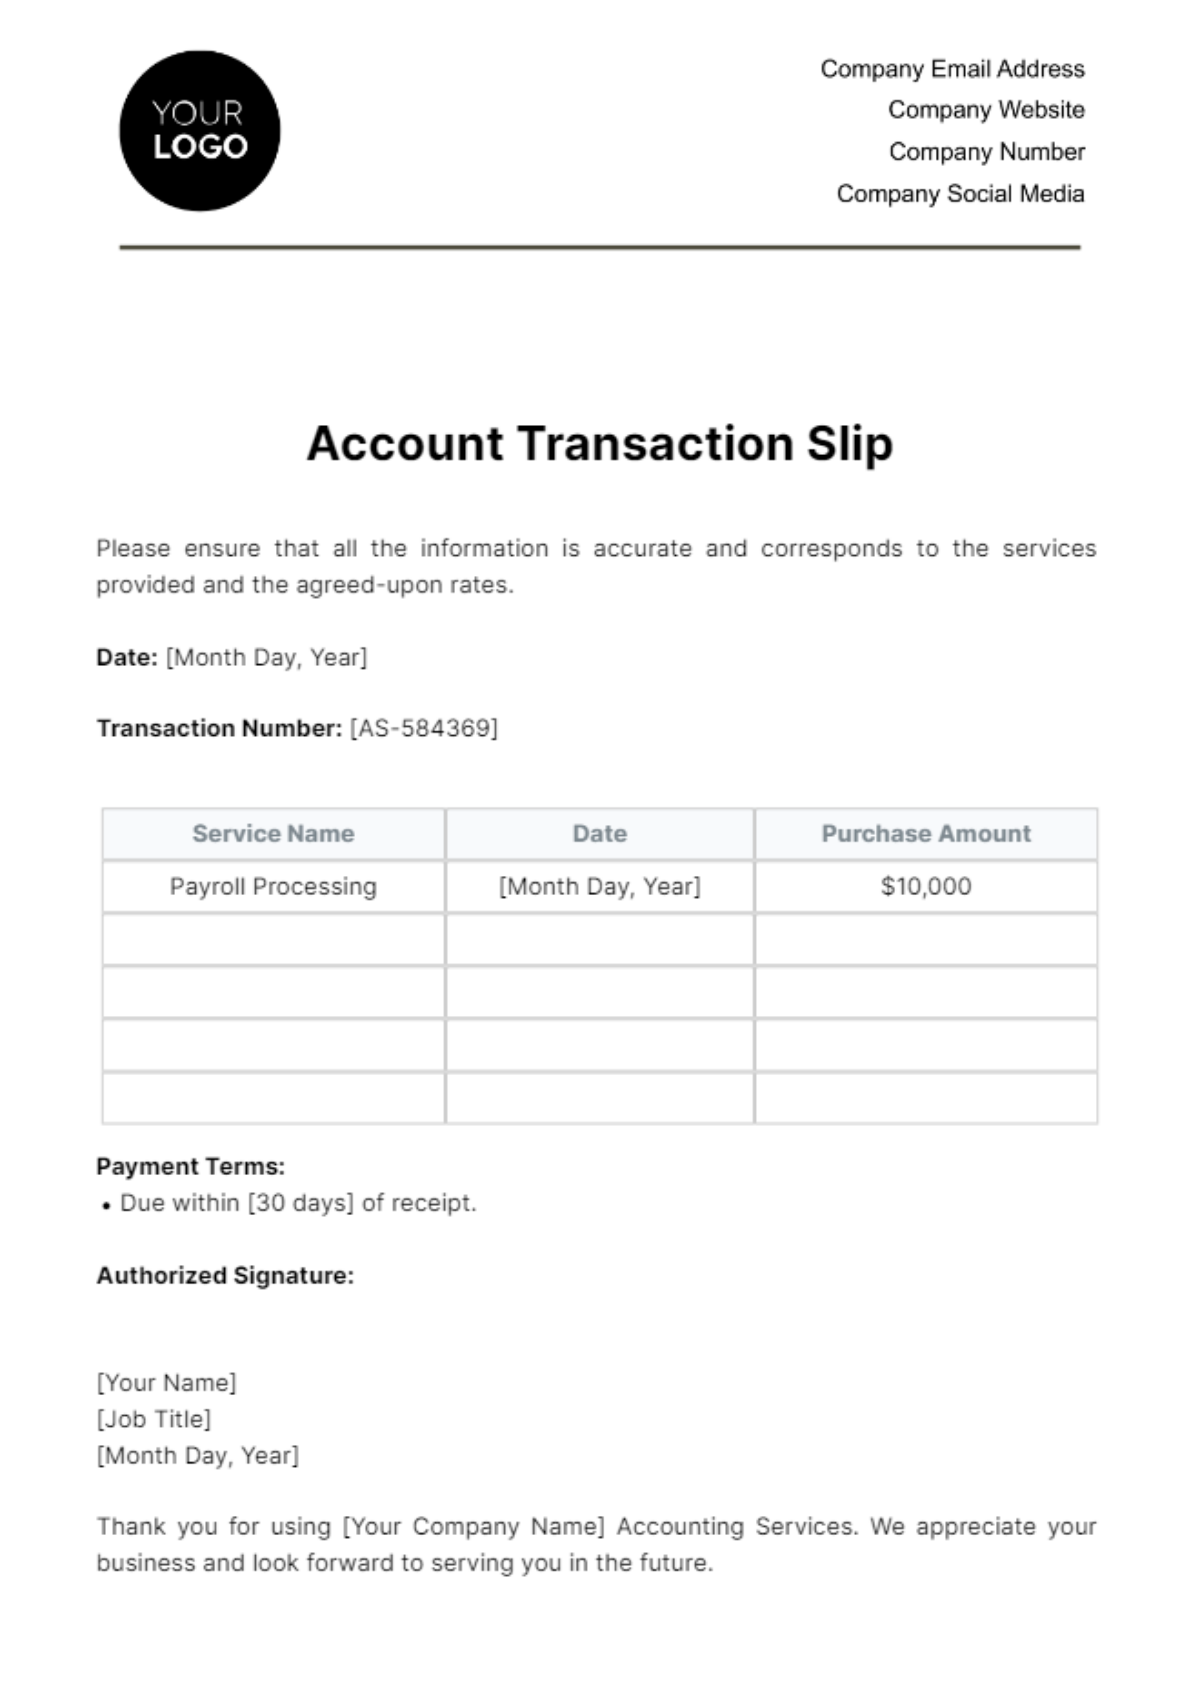 Account Transaction Slip Template